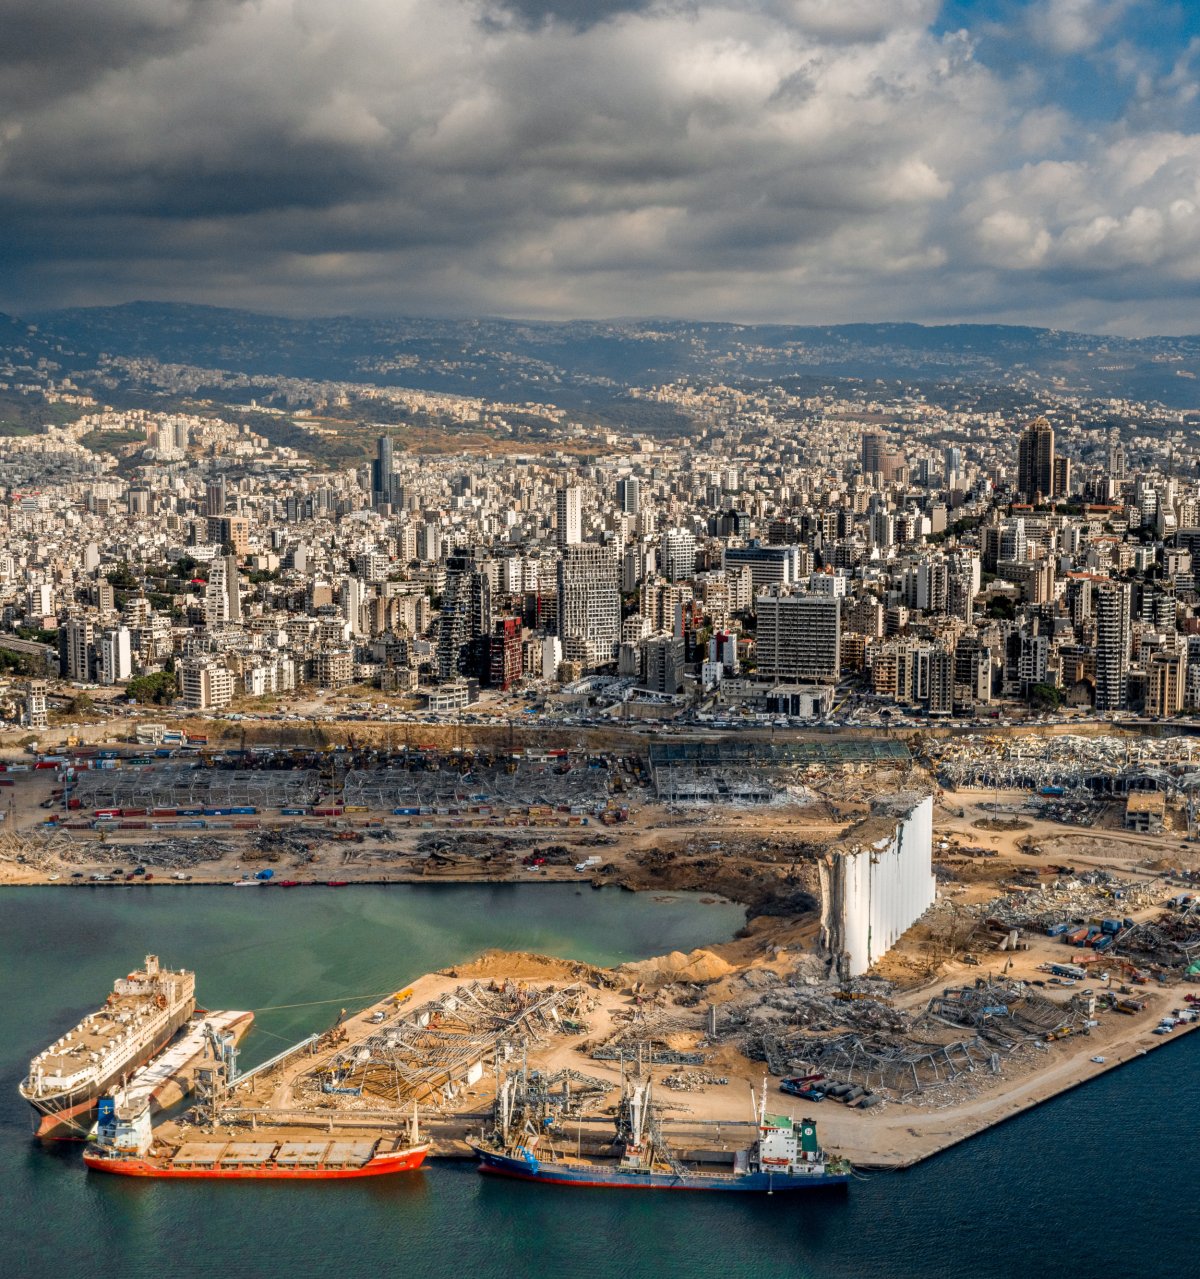 Beirut Port area